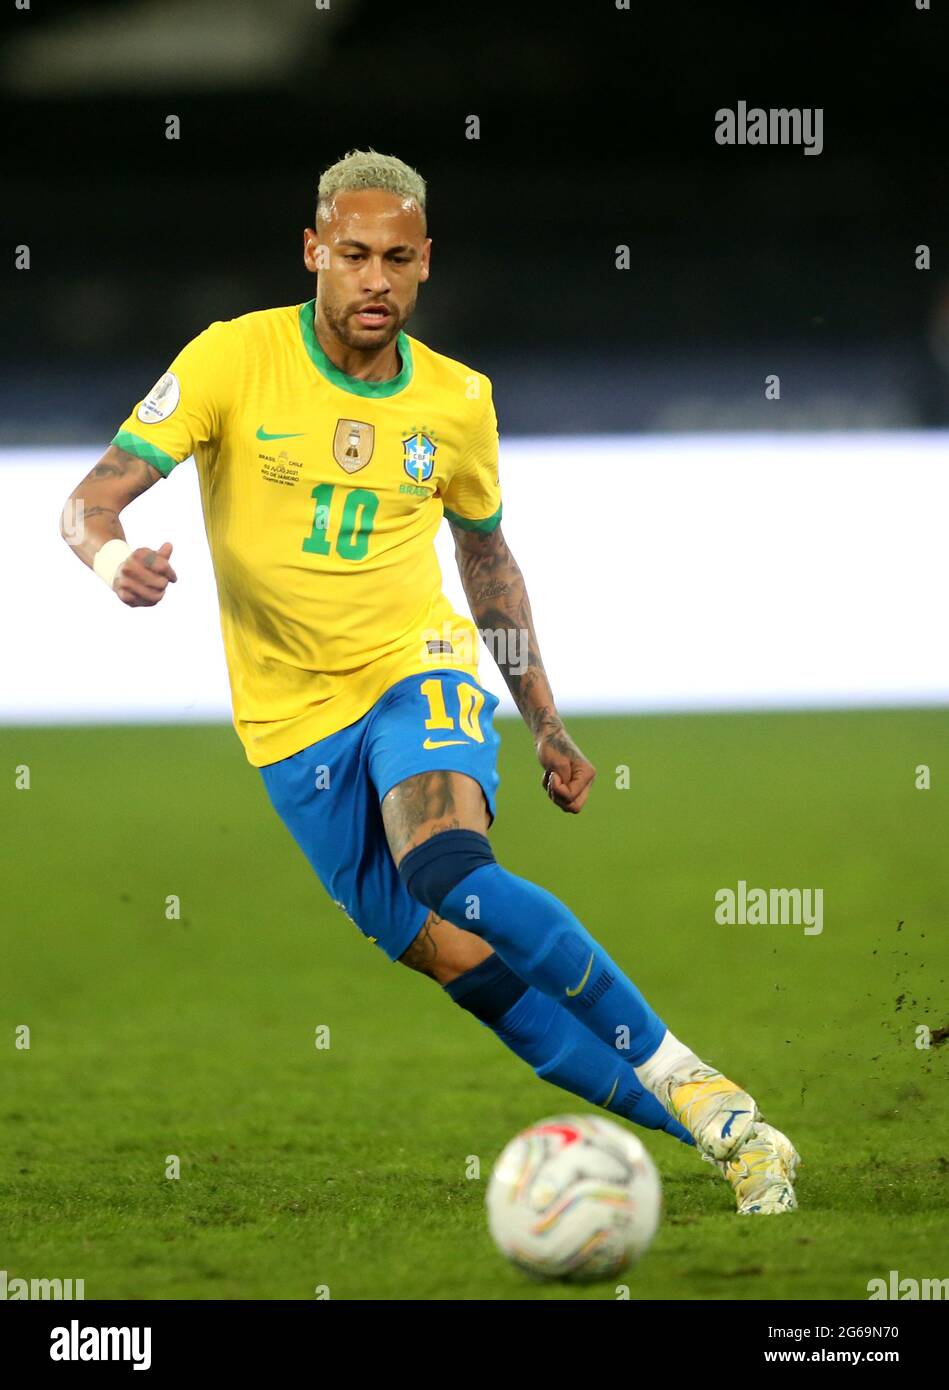 SportsCenterBR - Neymar Jr. na Copa 2018, segundo o Footstats